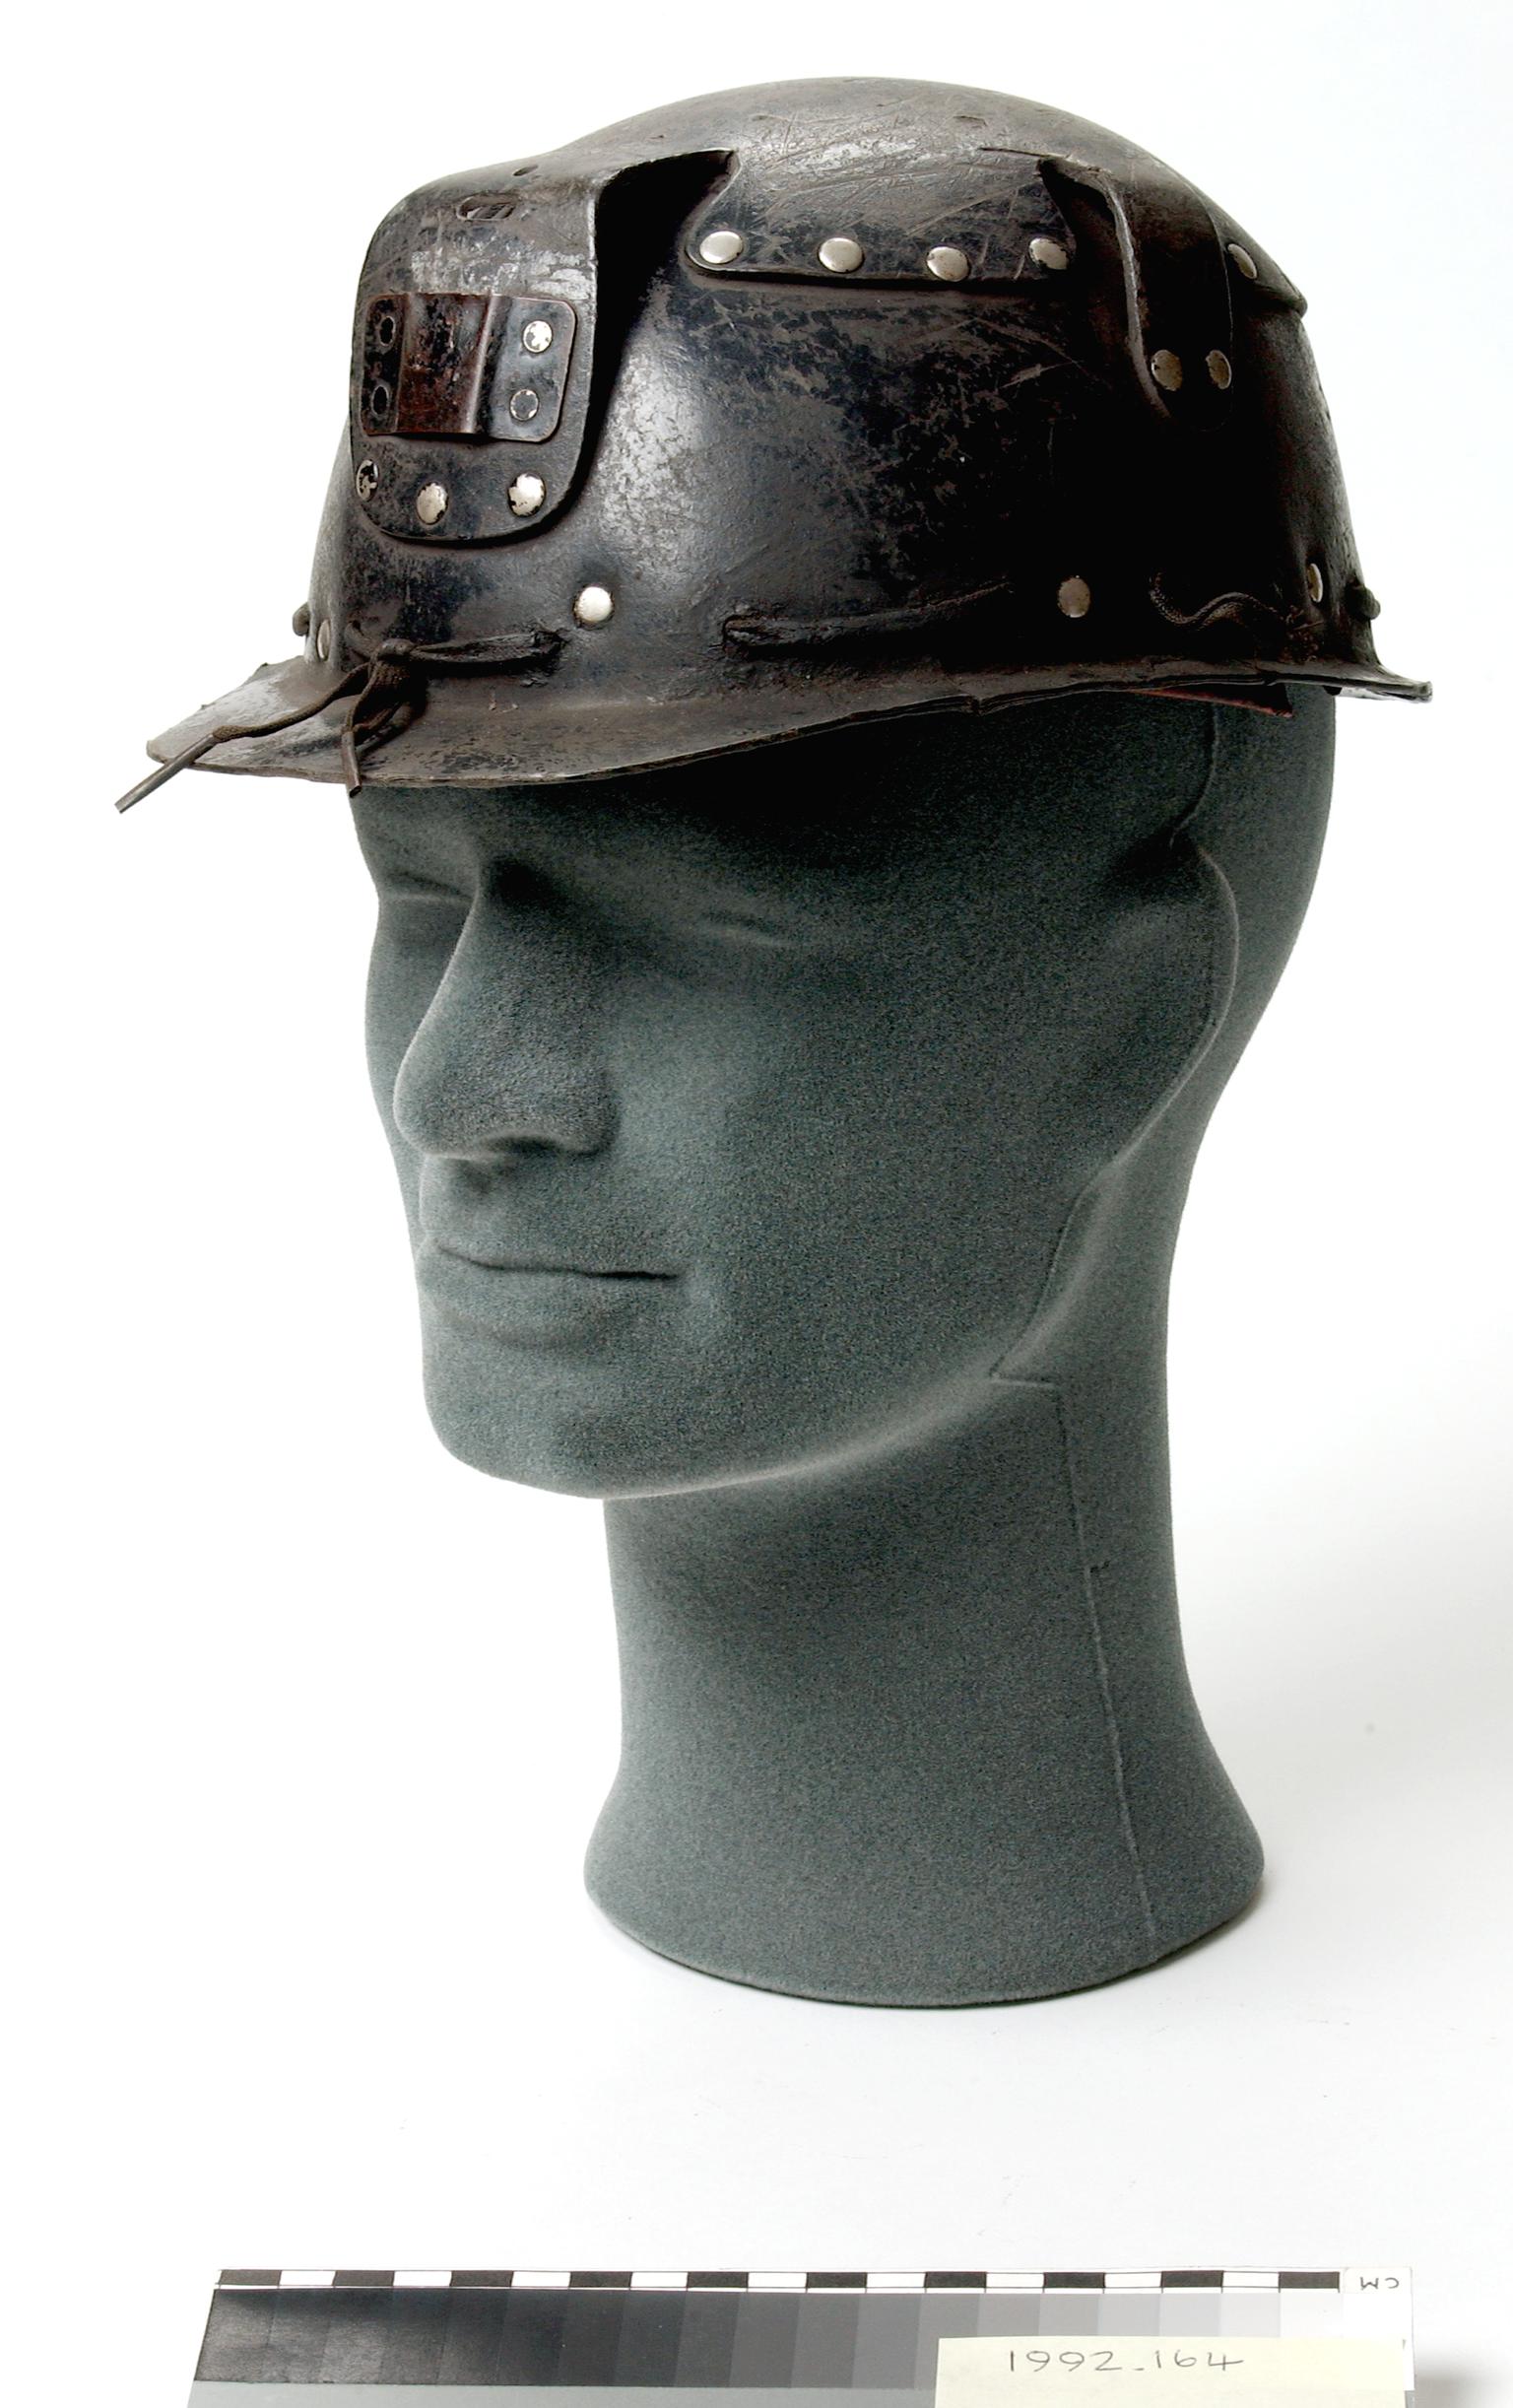 Coal miner's safety helmet